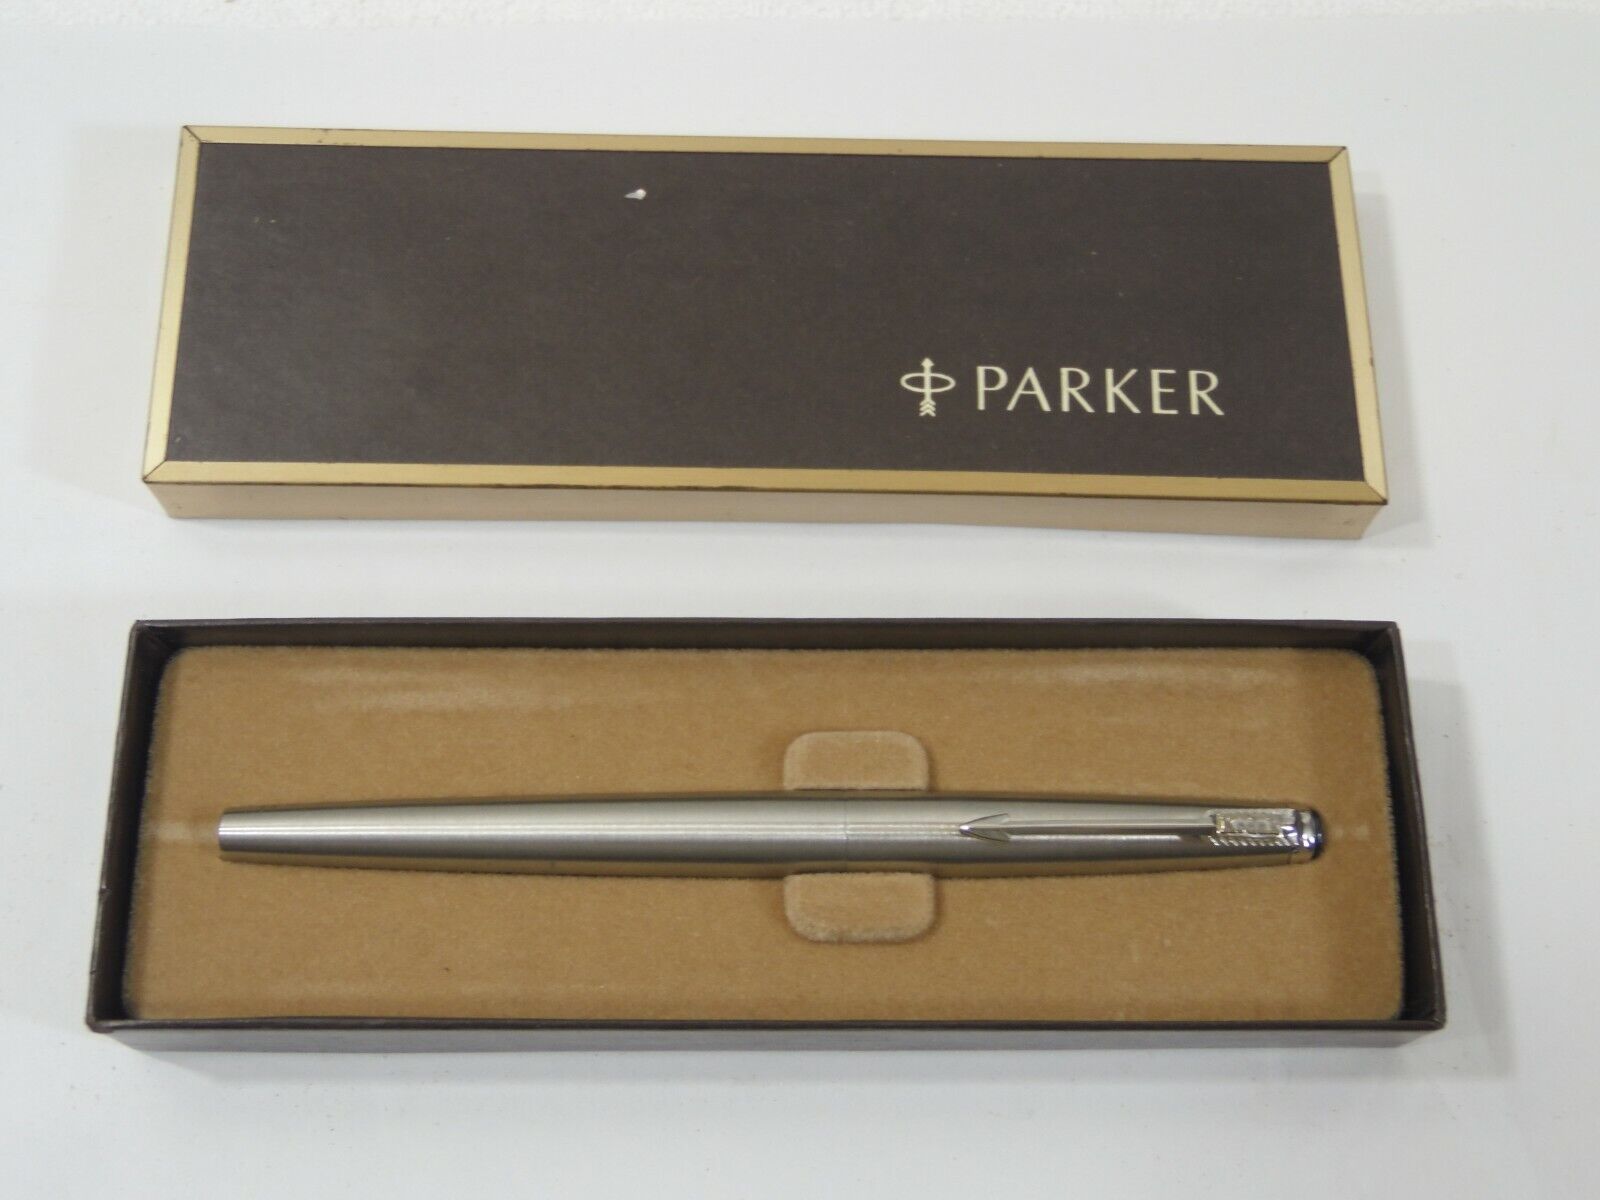 A Scarce "parker" The Space Pen "kodak" Employee Award With Box